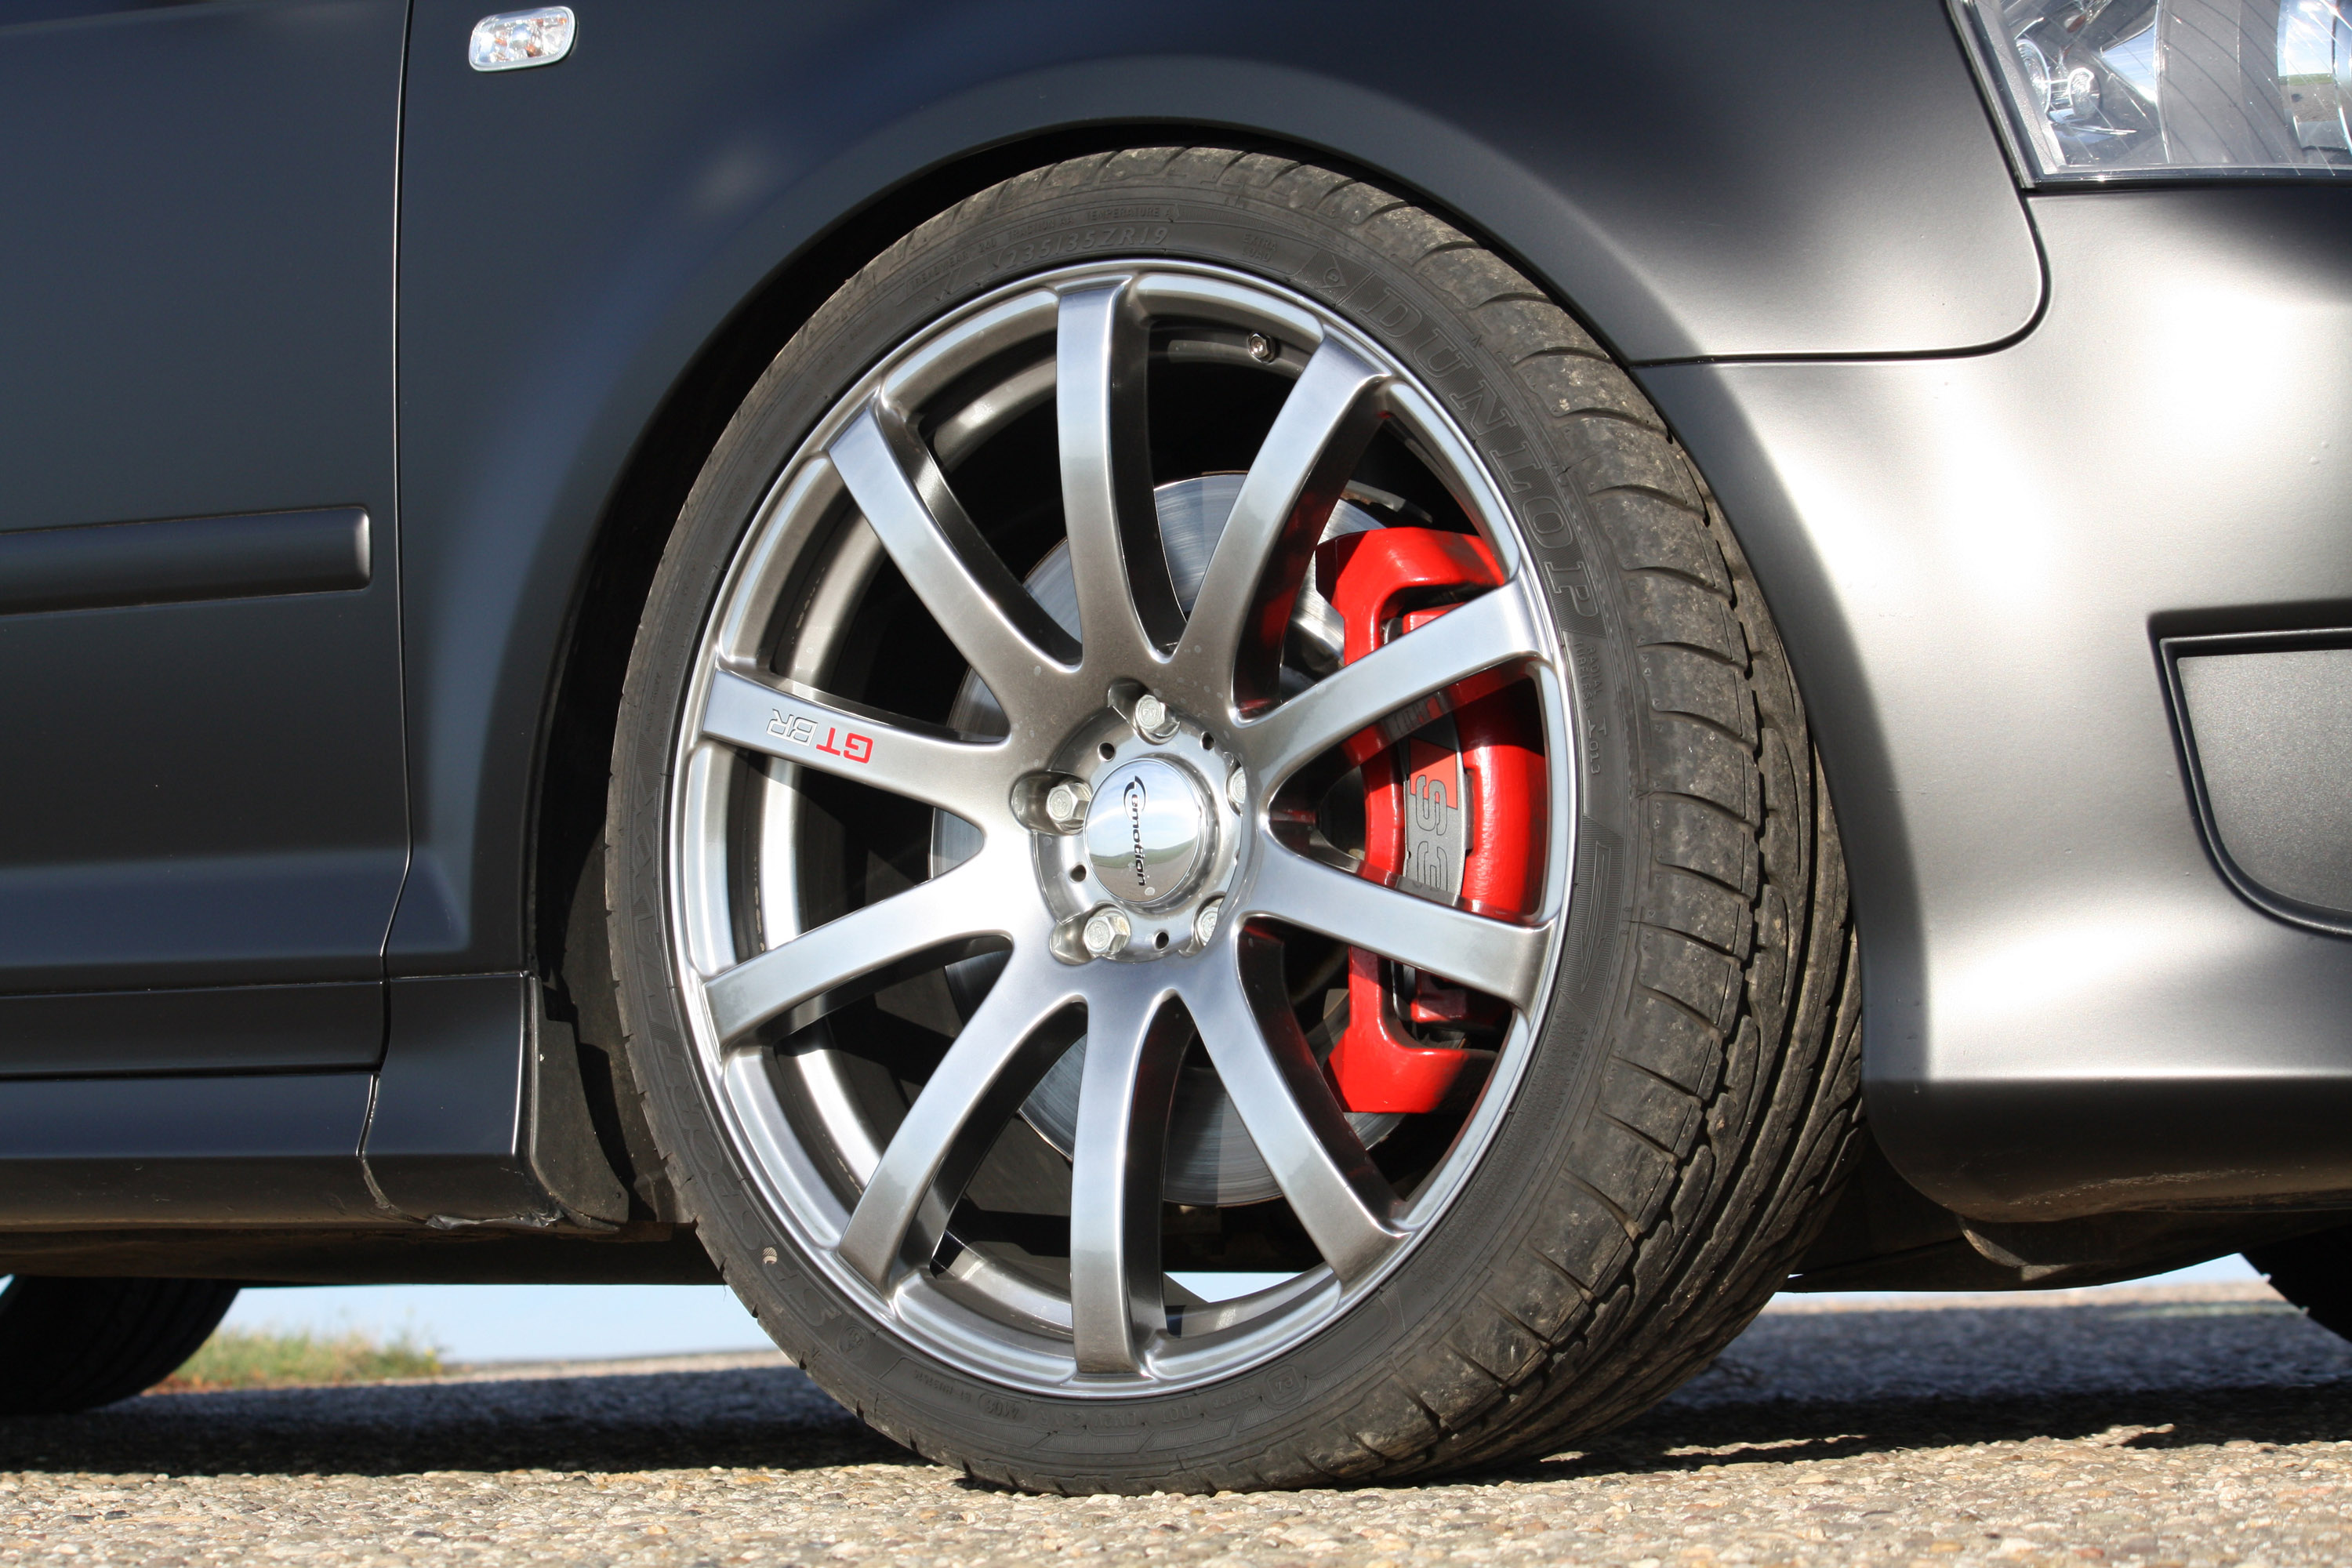 MR Car Design Audi S3 Black Performance Edition